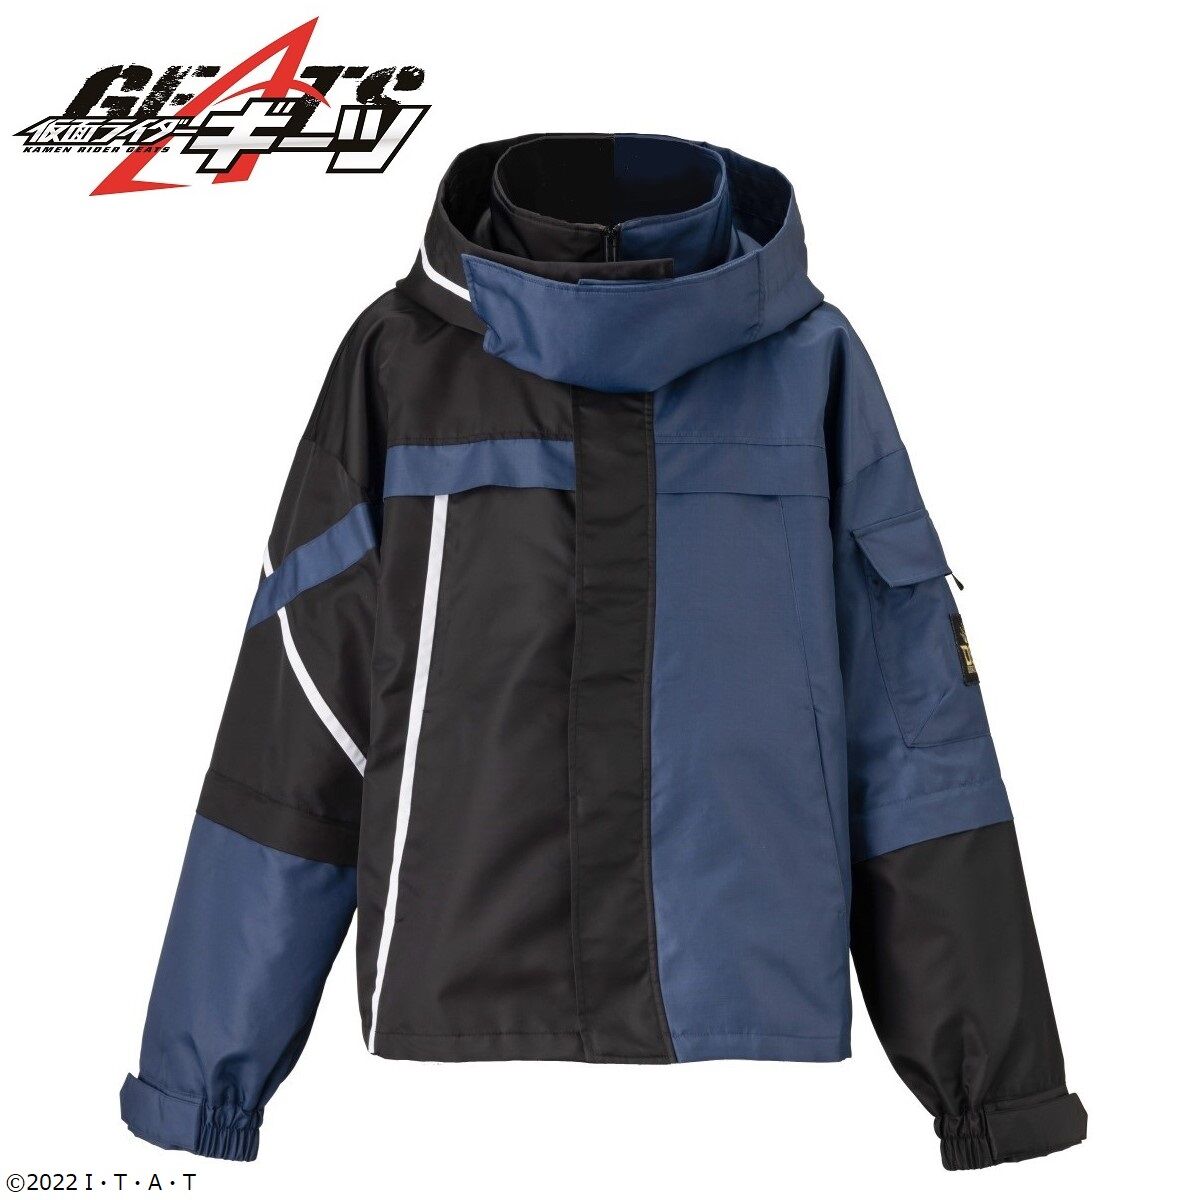 Kamen Rider Geats Desire Grand Prix Jacket